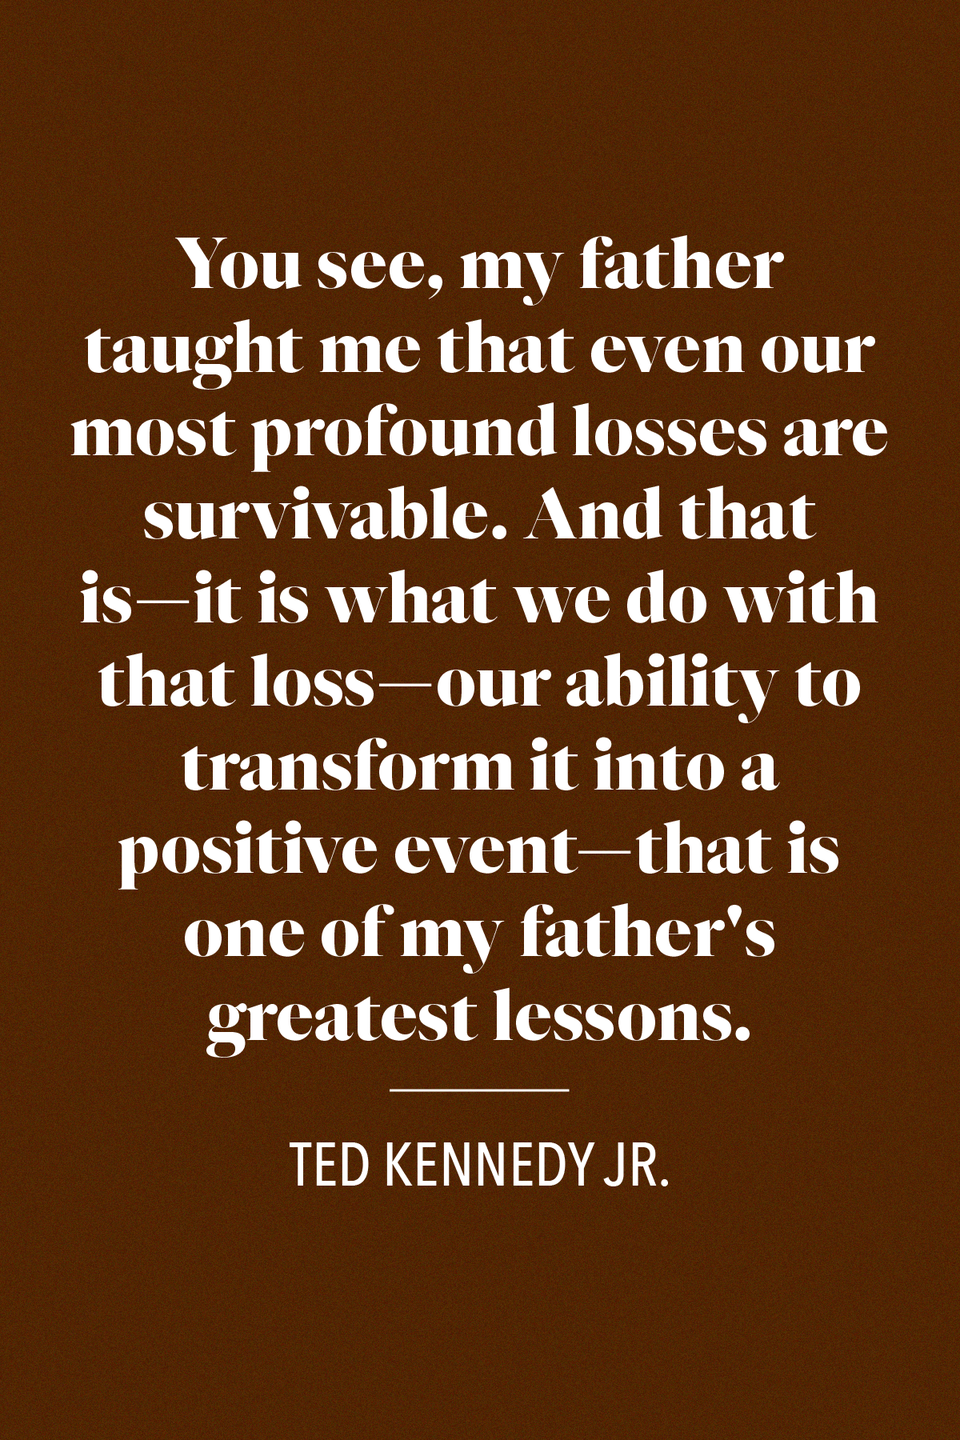 Ted Kennedy Jr.